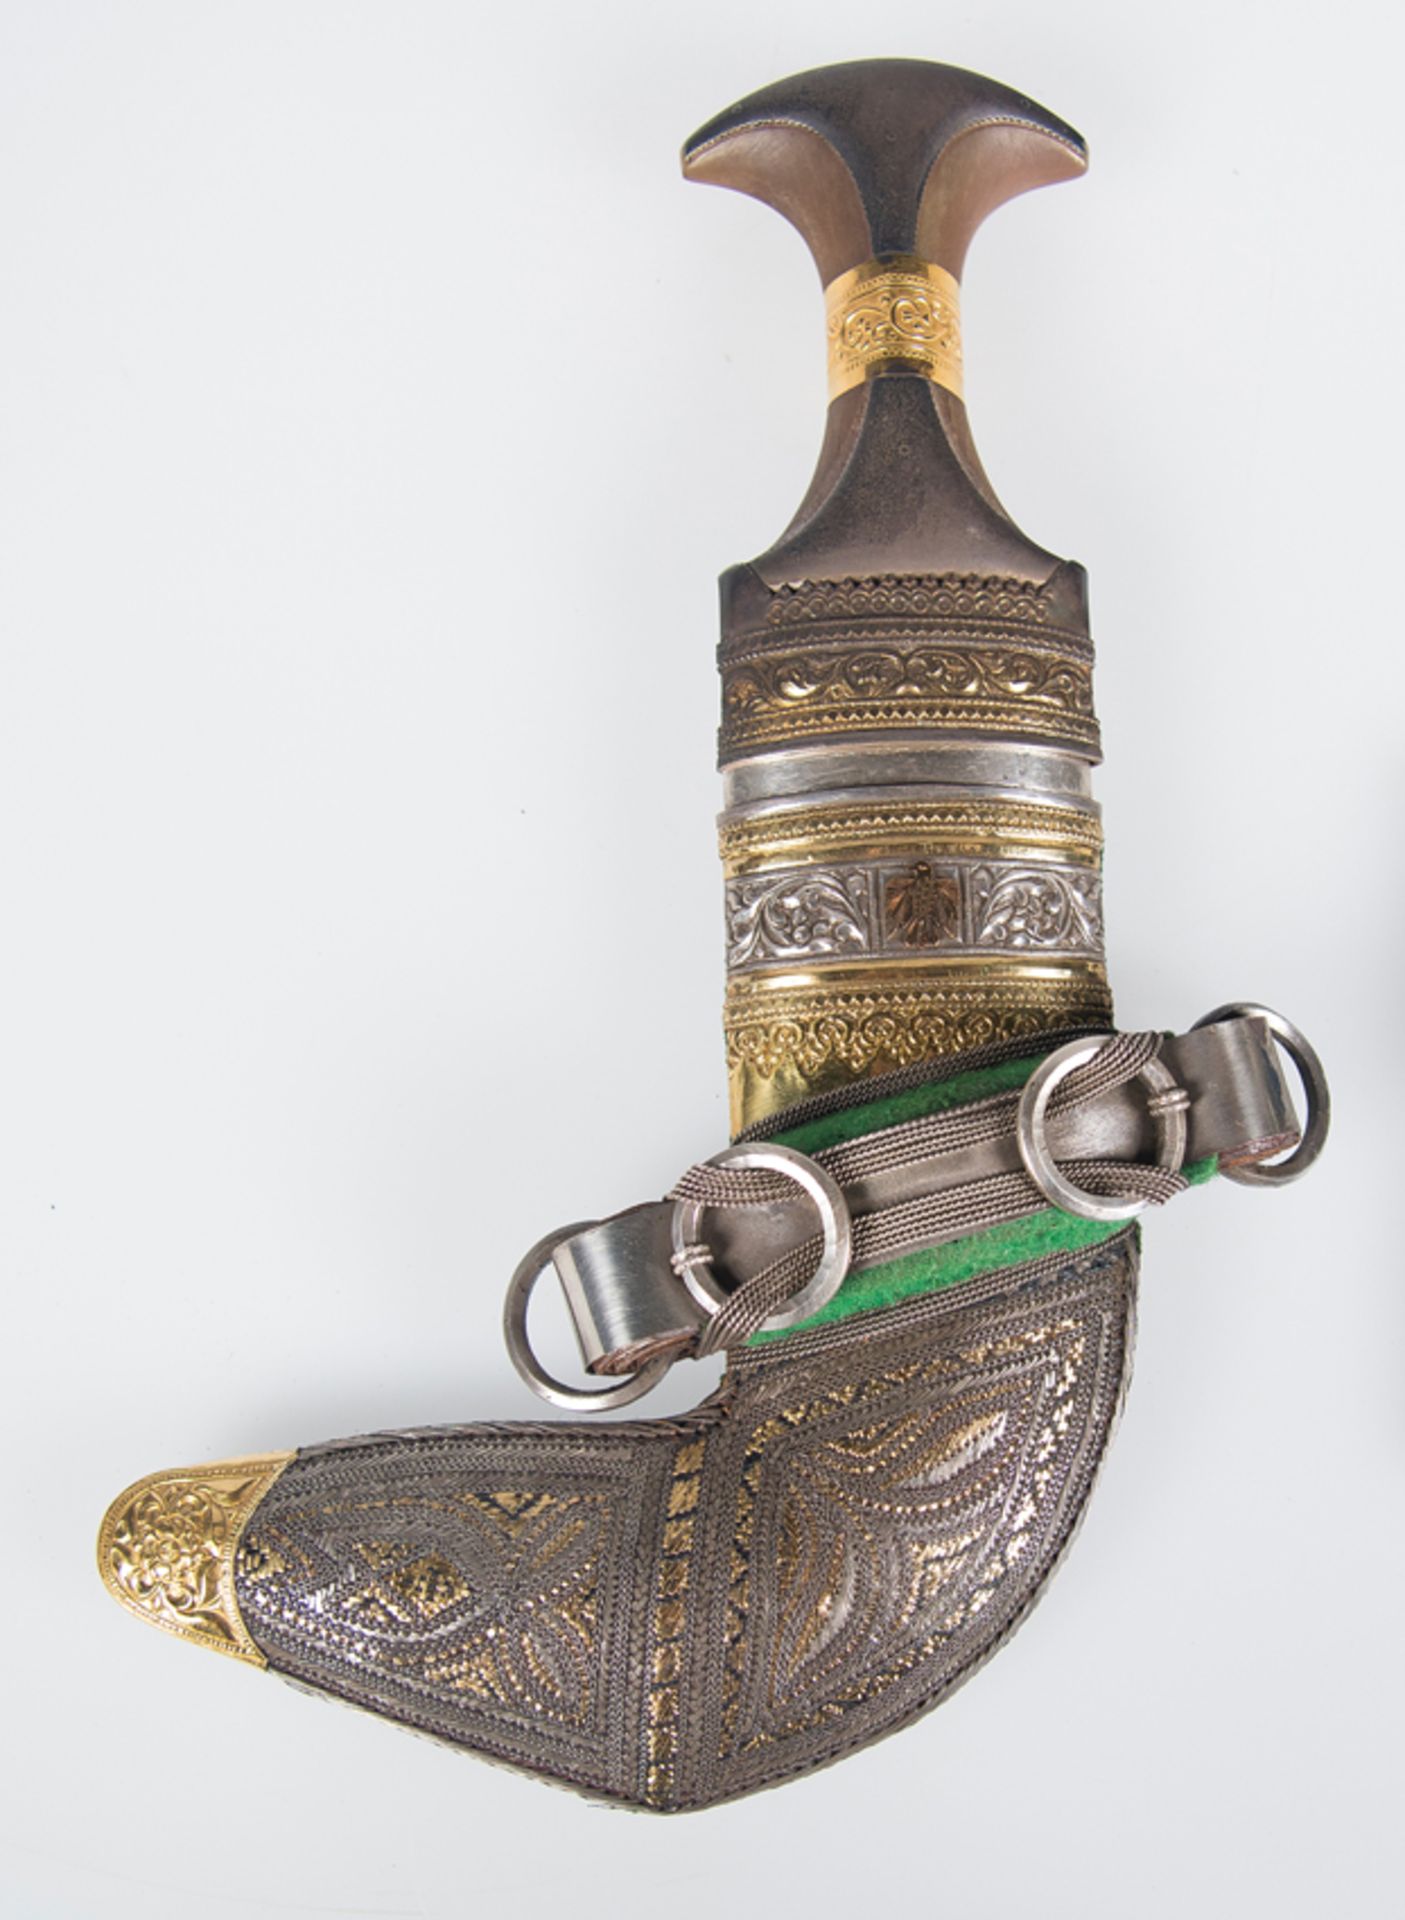 Arabian dagger. Possibly Yemen. Late 19th century - early 20th century. - Image 2 of 3